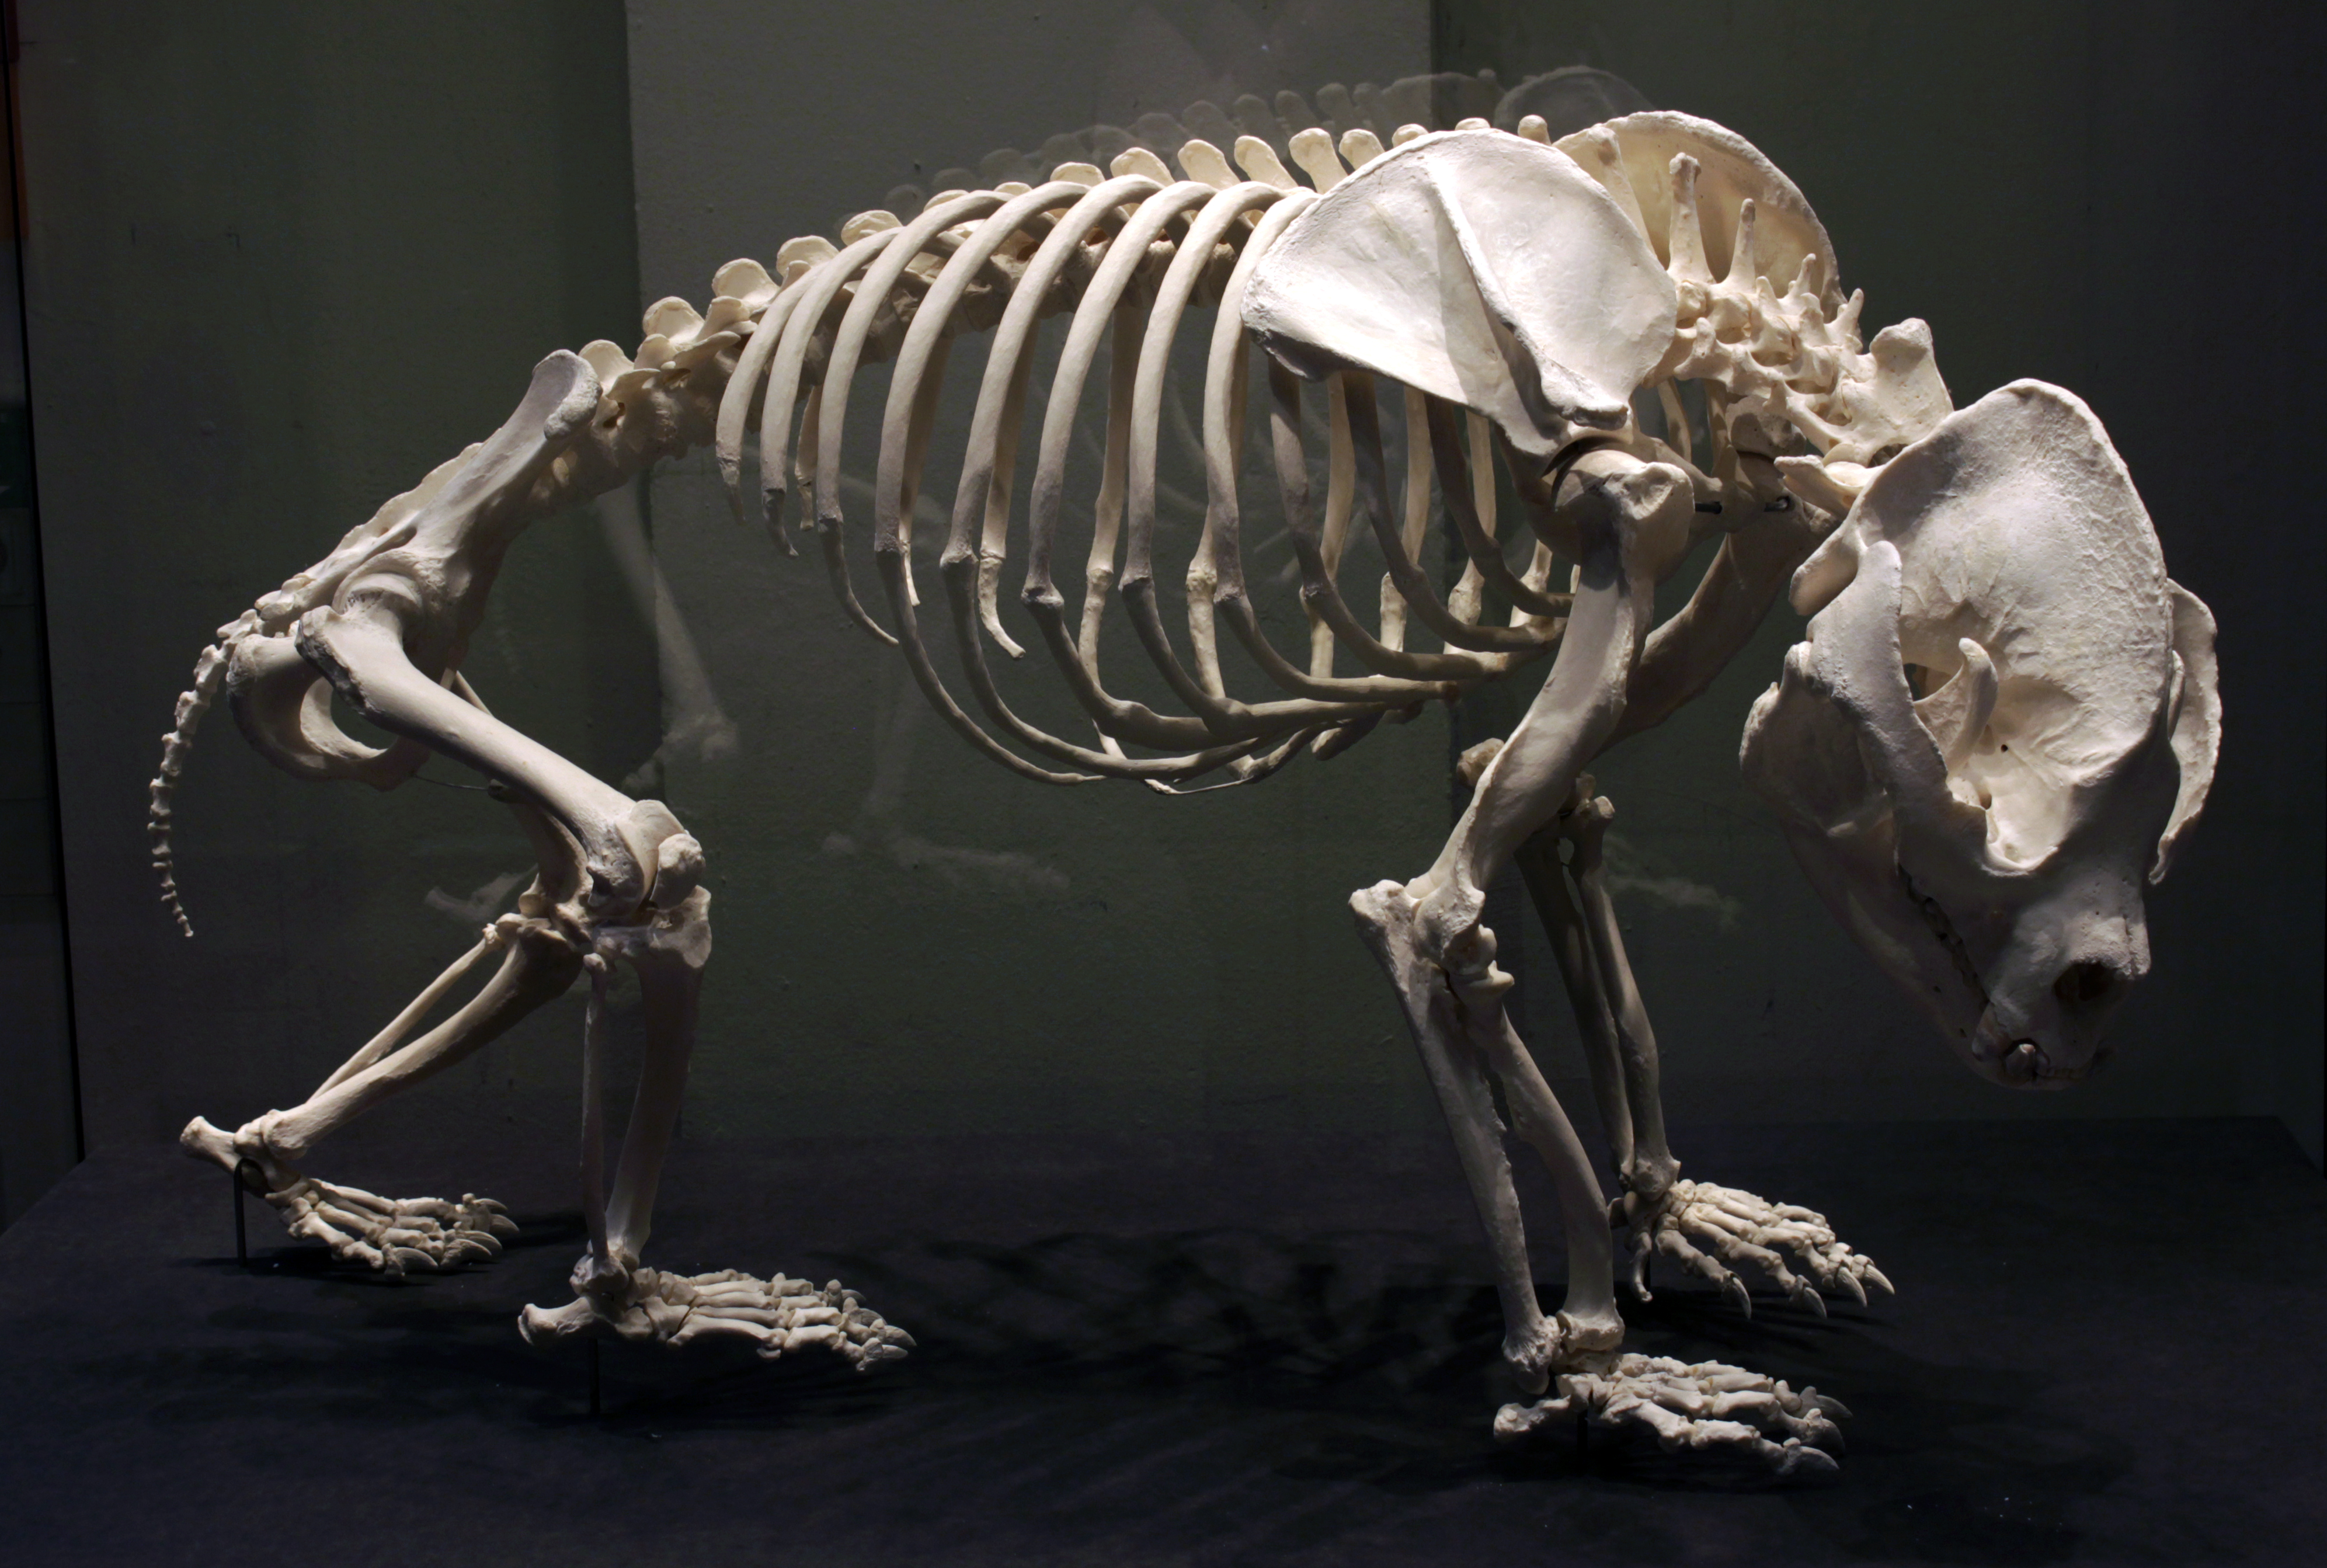 https://upload.wikimedia.org/wikipedia/commons/d/de/Giant_panda_skeleton_Bao_Bao_Berlin_Museum_f%C3%BCr_Naturkunde_28042018.jpg